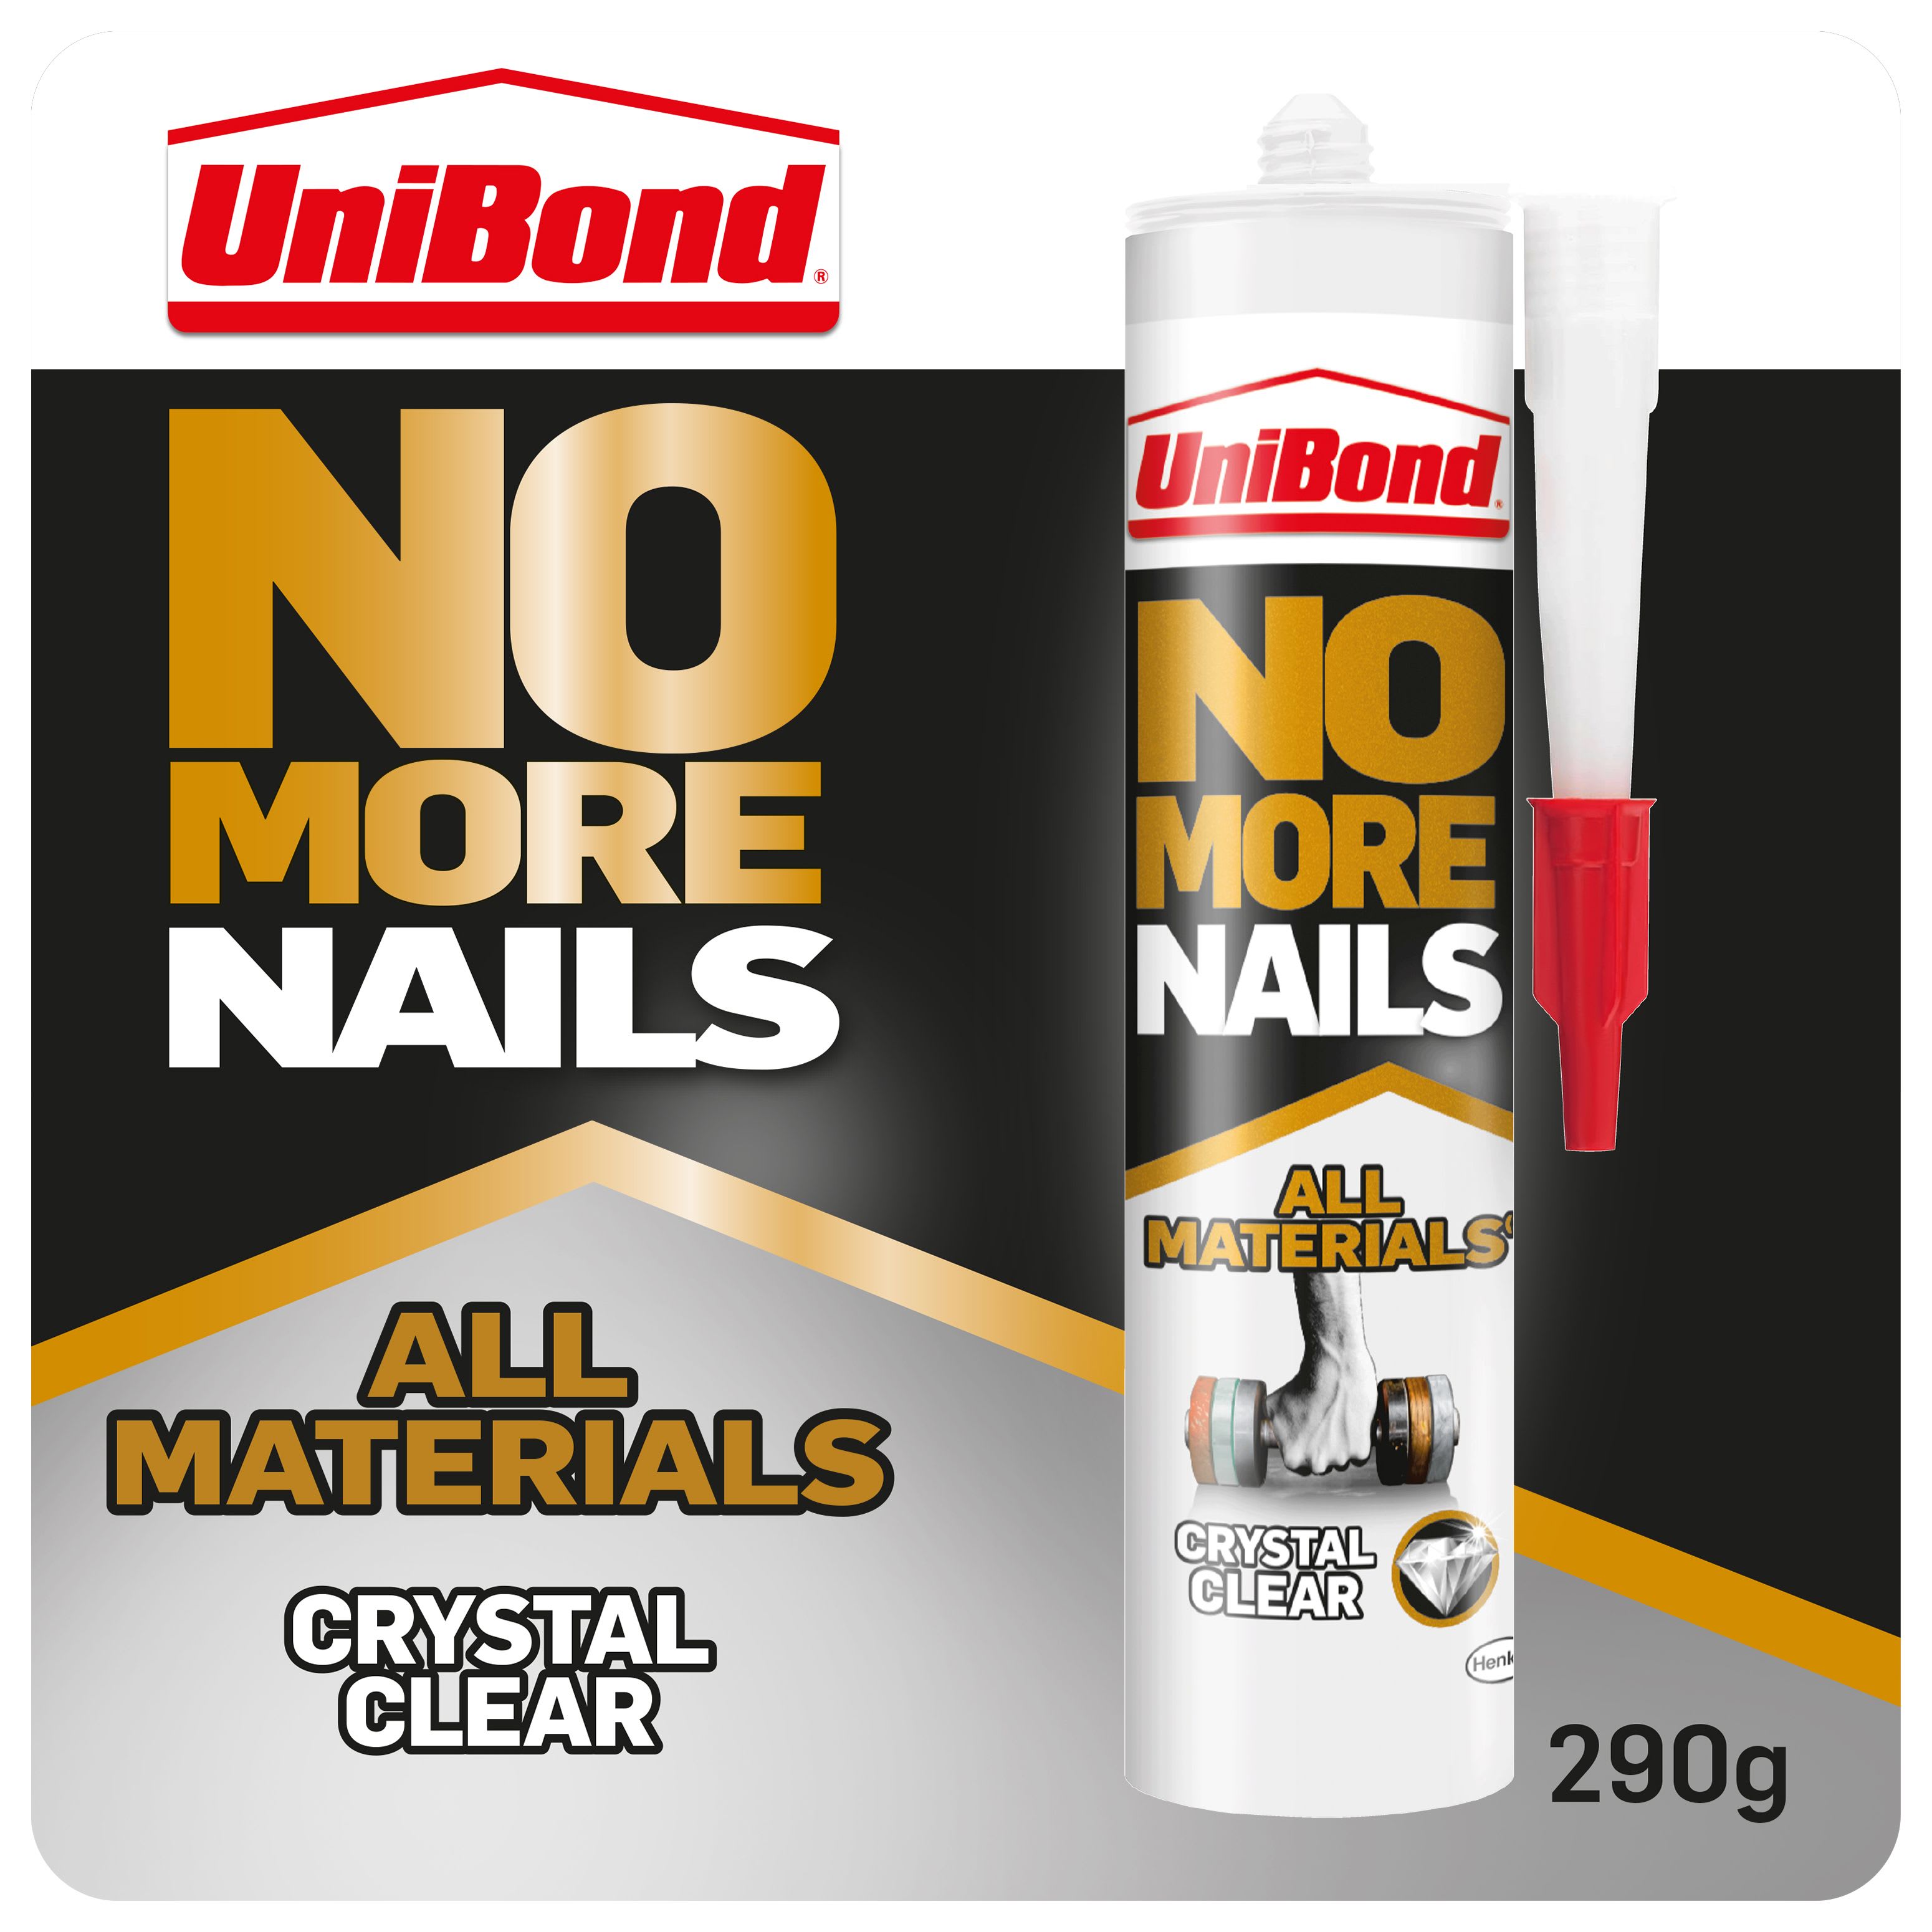 Unibond No More Nails All Materials Crystal Clear